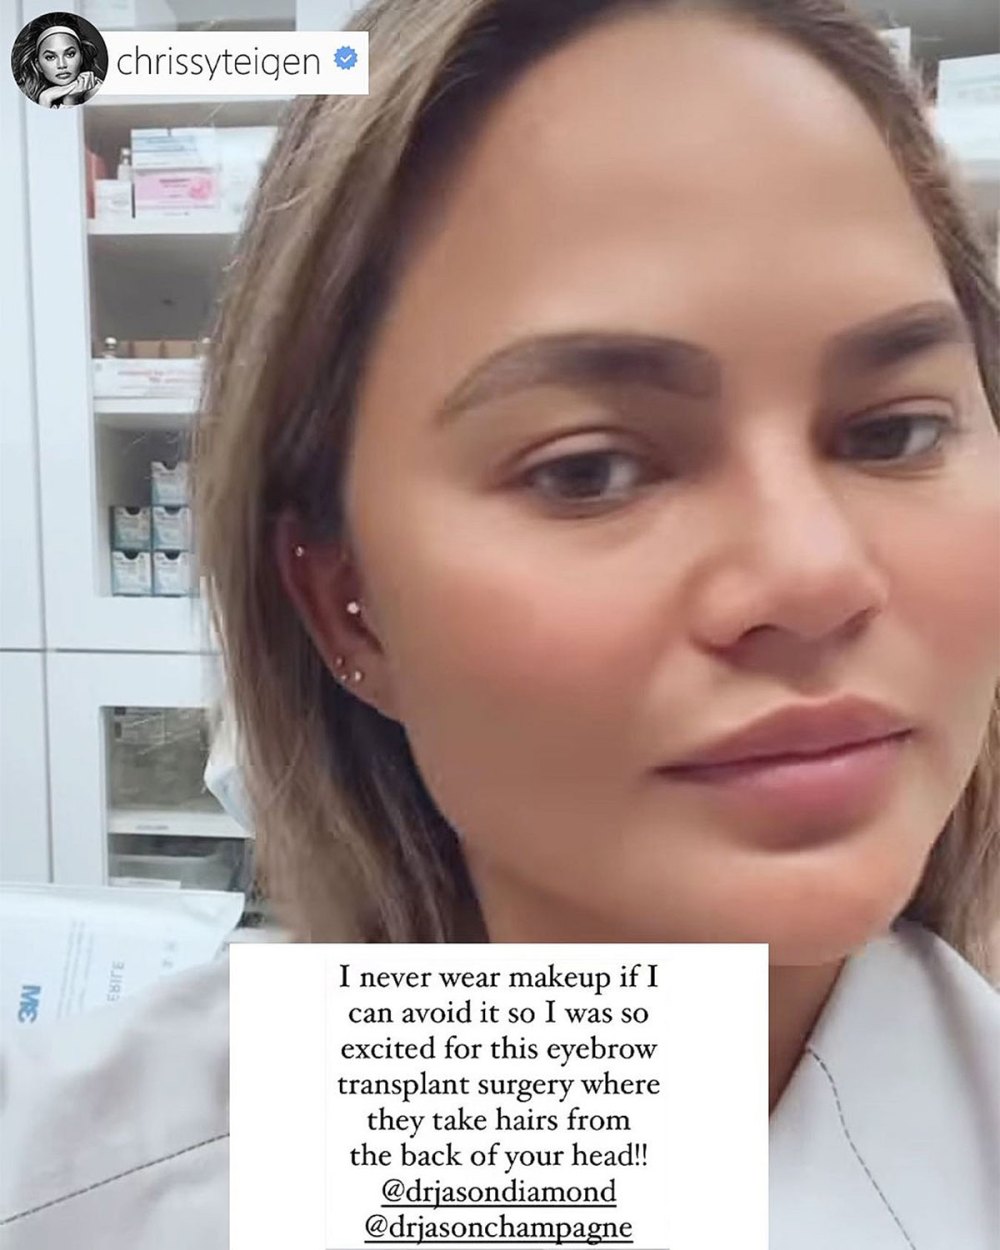 Chrissy Teigen Asks Why Eyebrow Transplant Has People Riled Up